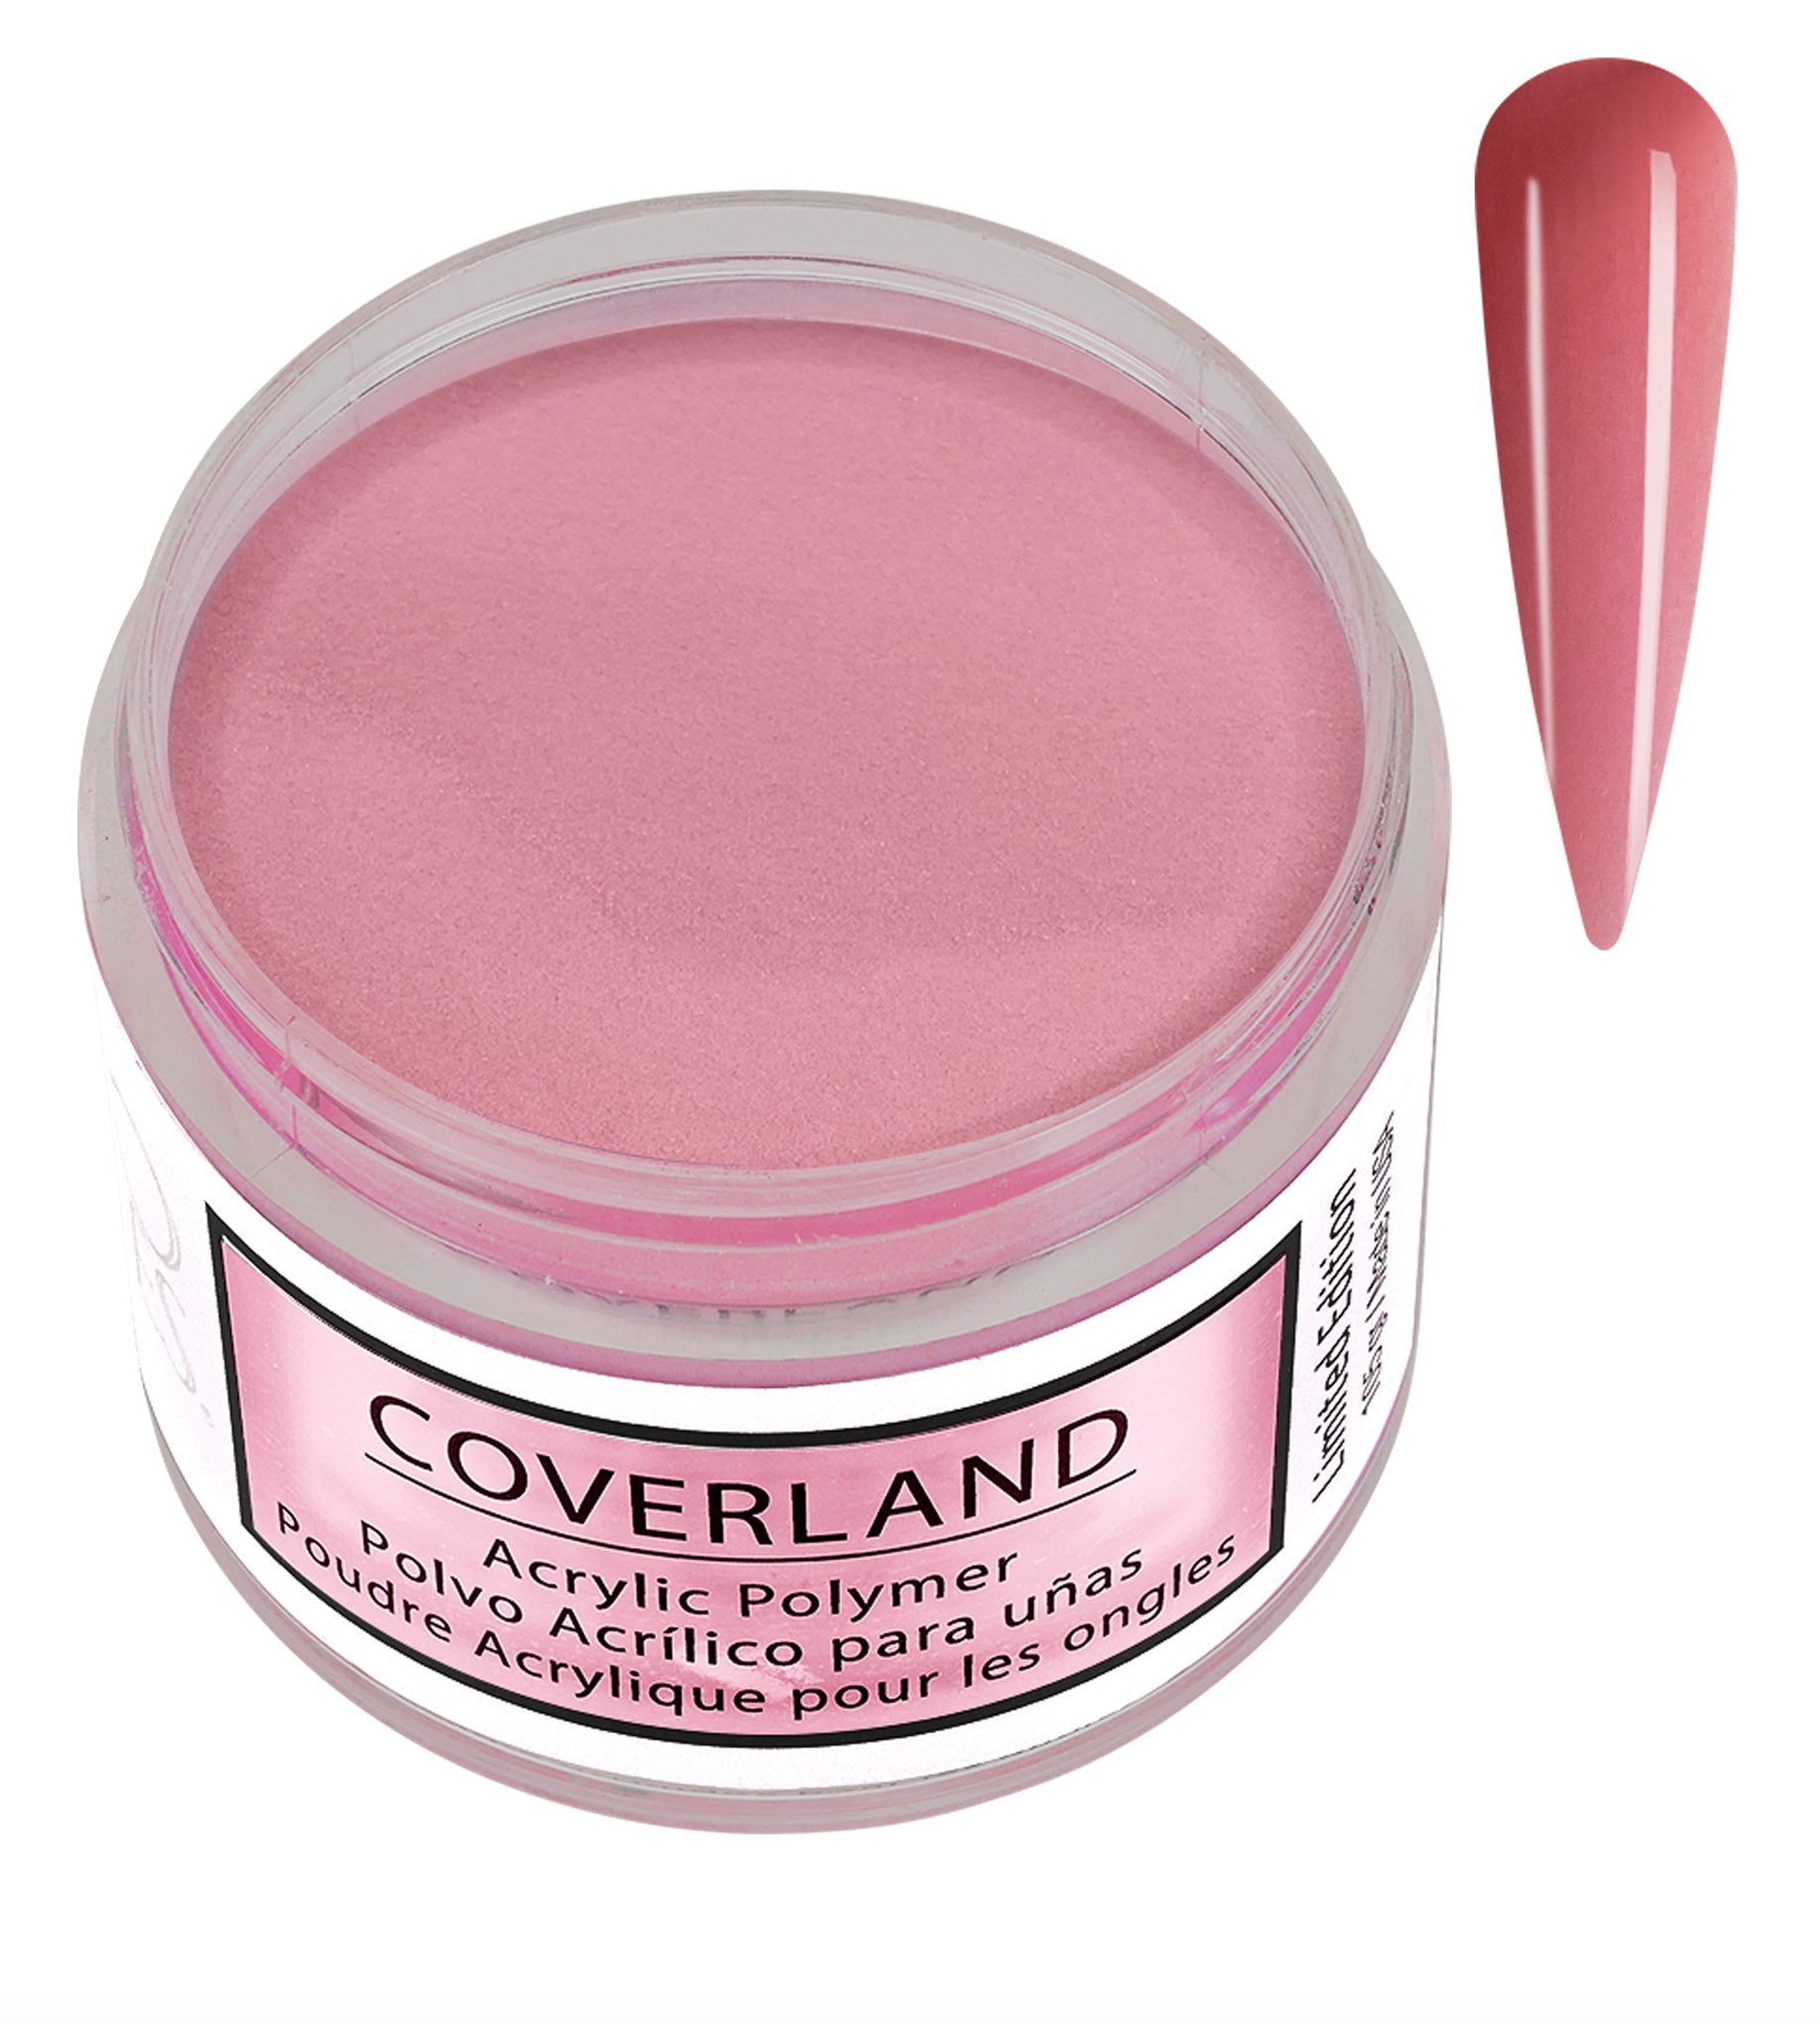 Coverland Acrylic Powder - 